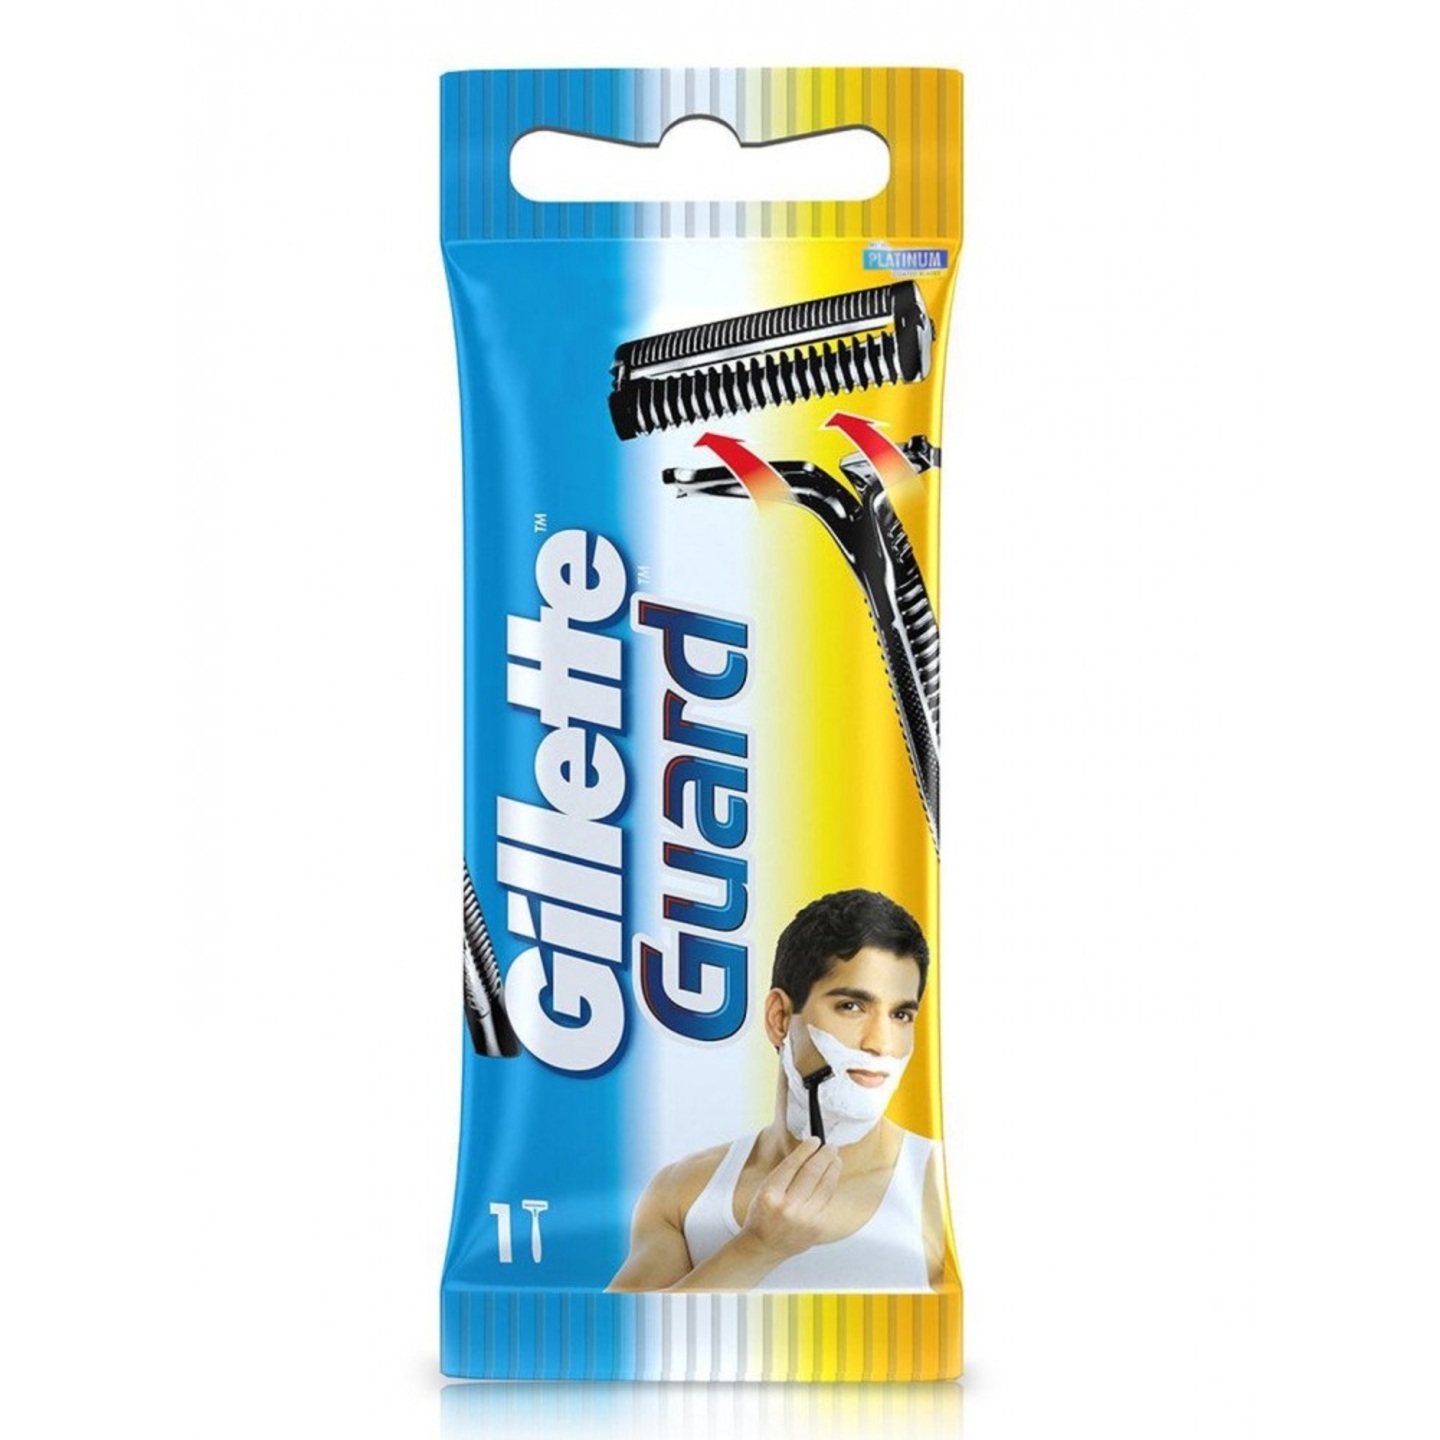 Gillette Guard Razor with Platinum Coated Blade